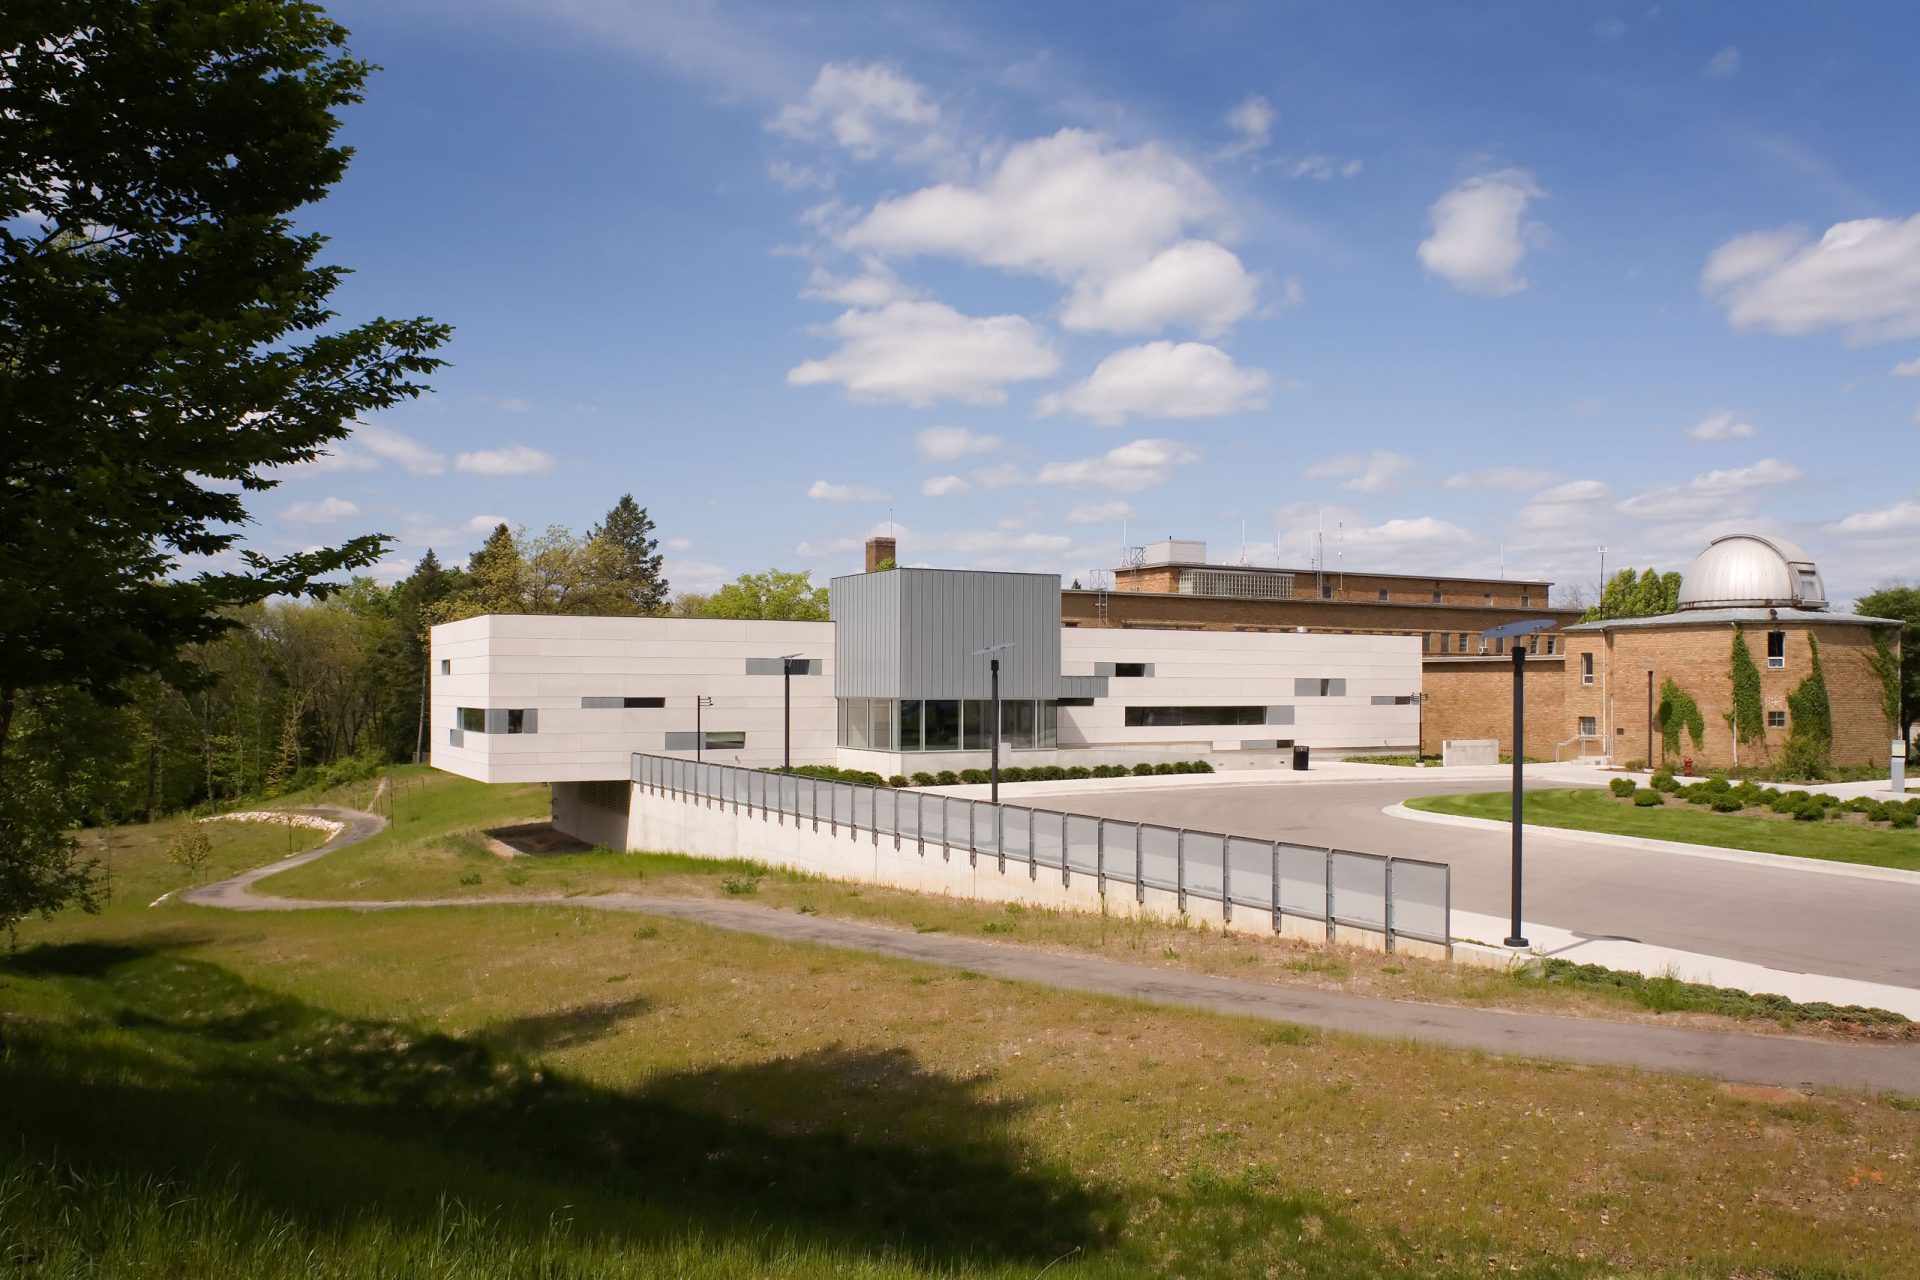 Studio Ma - Cranbrook Institute of Science